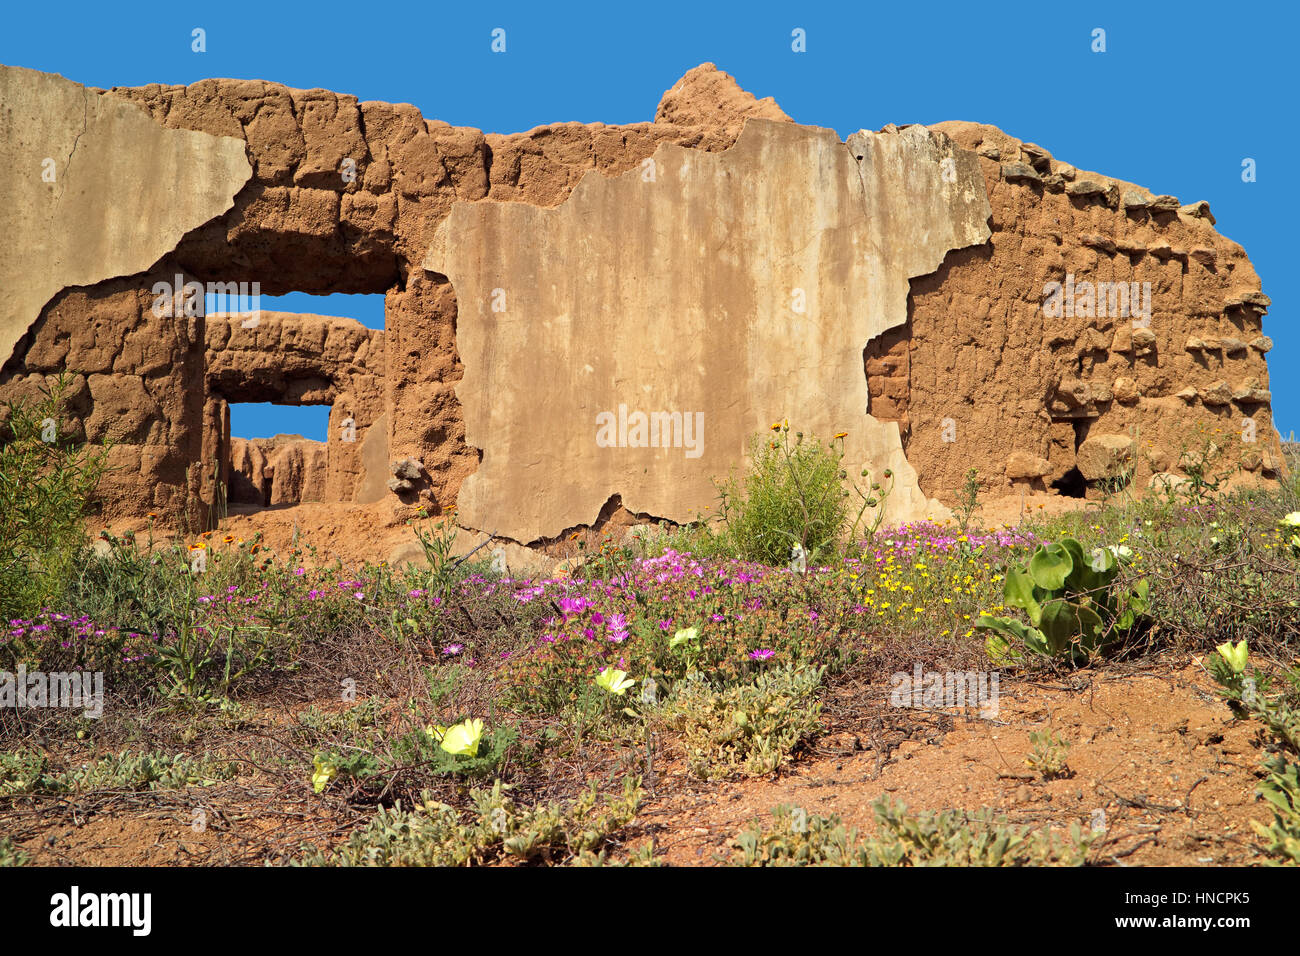 Ruinas antiguas y coloridas flores silvestres, Namaqualand, Sudáfrica Foto de stock